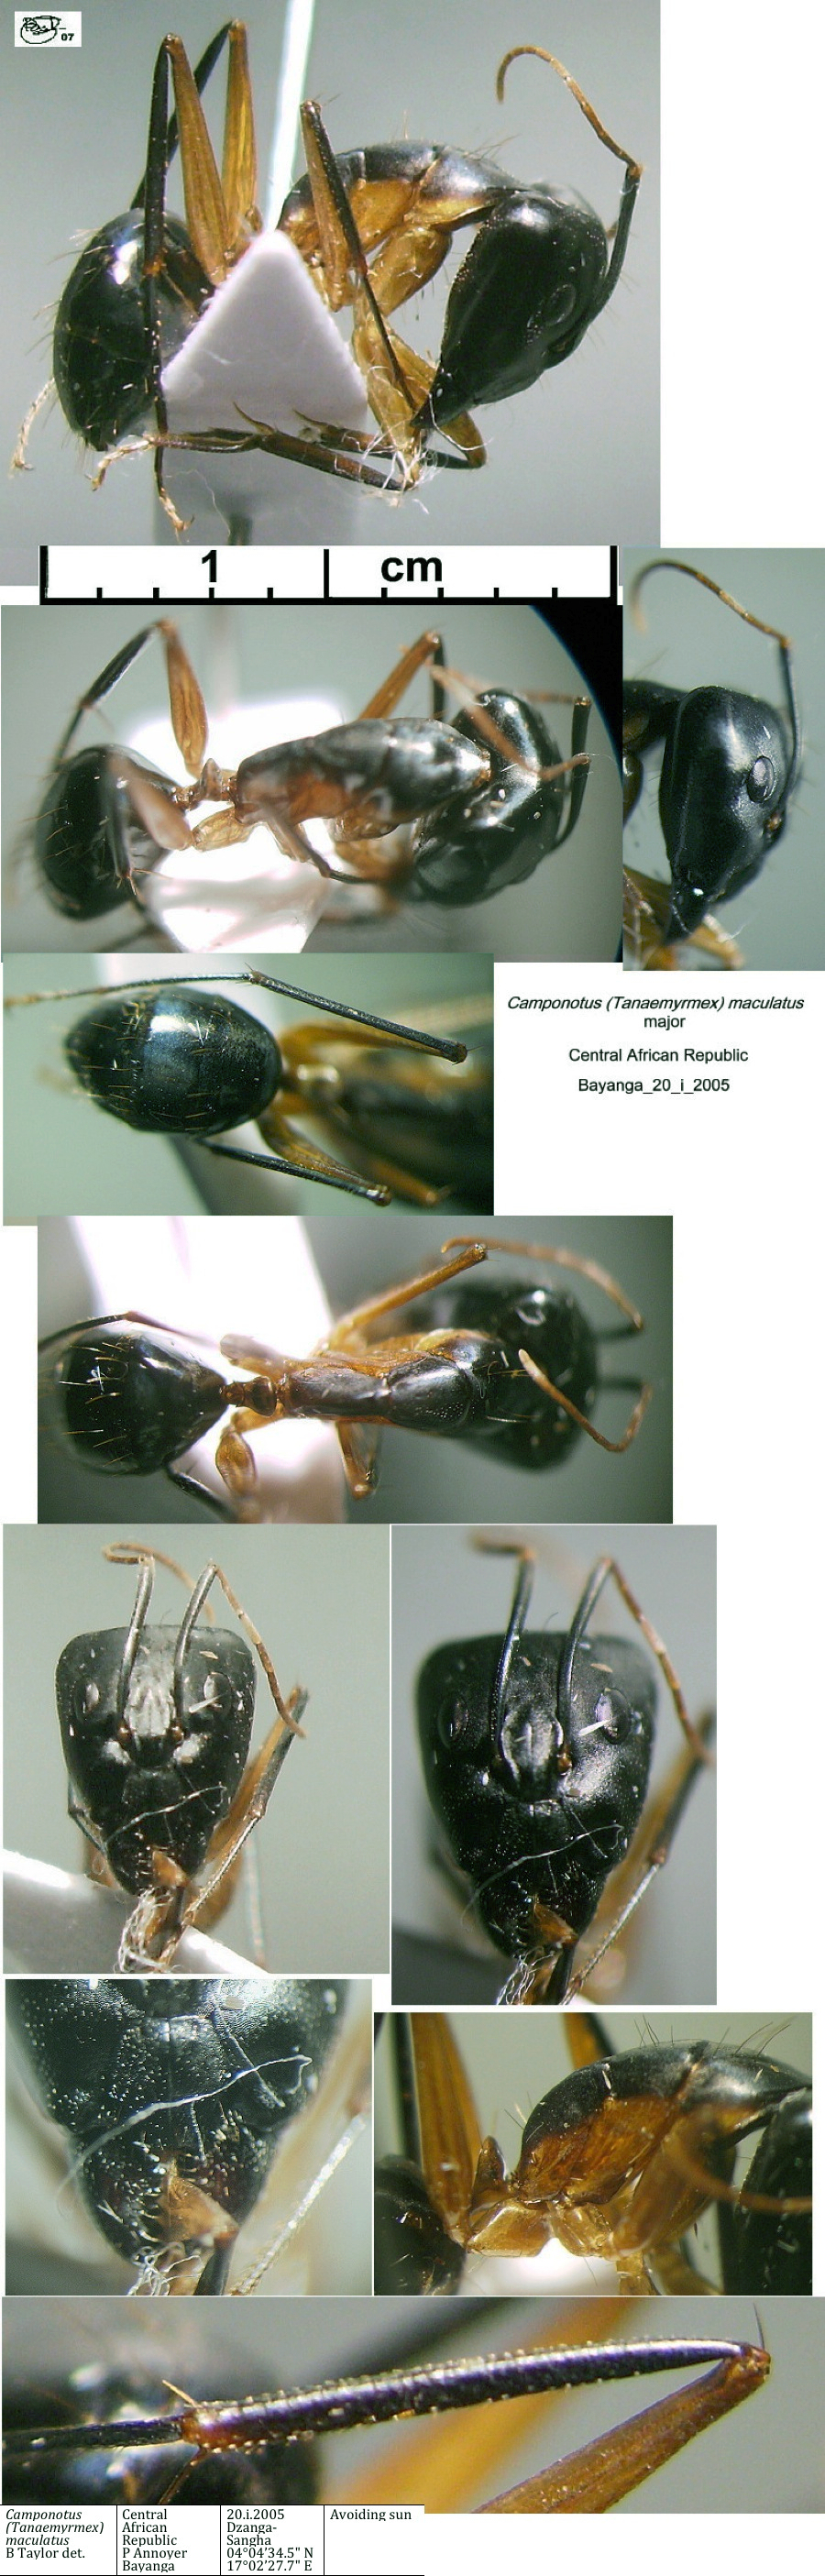 {Camponotus maculatus major CAR Bayanga}